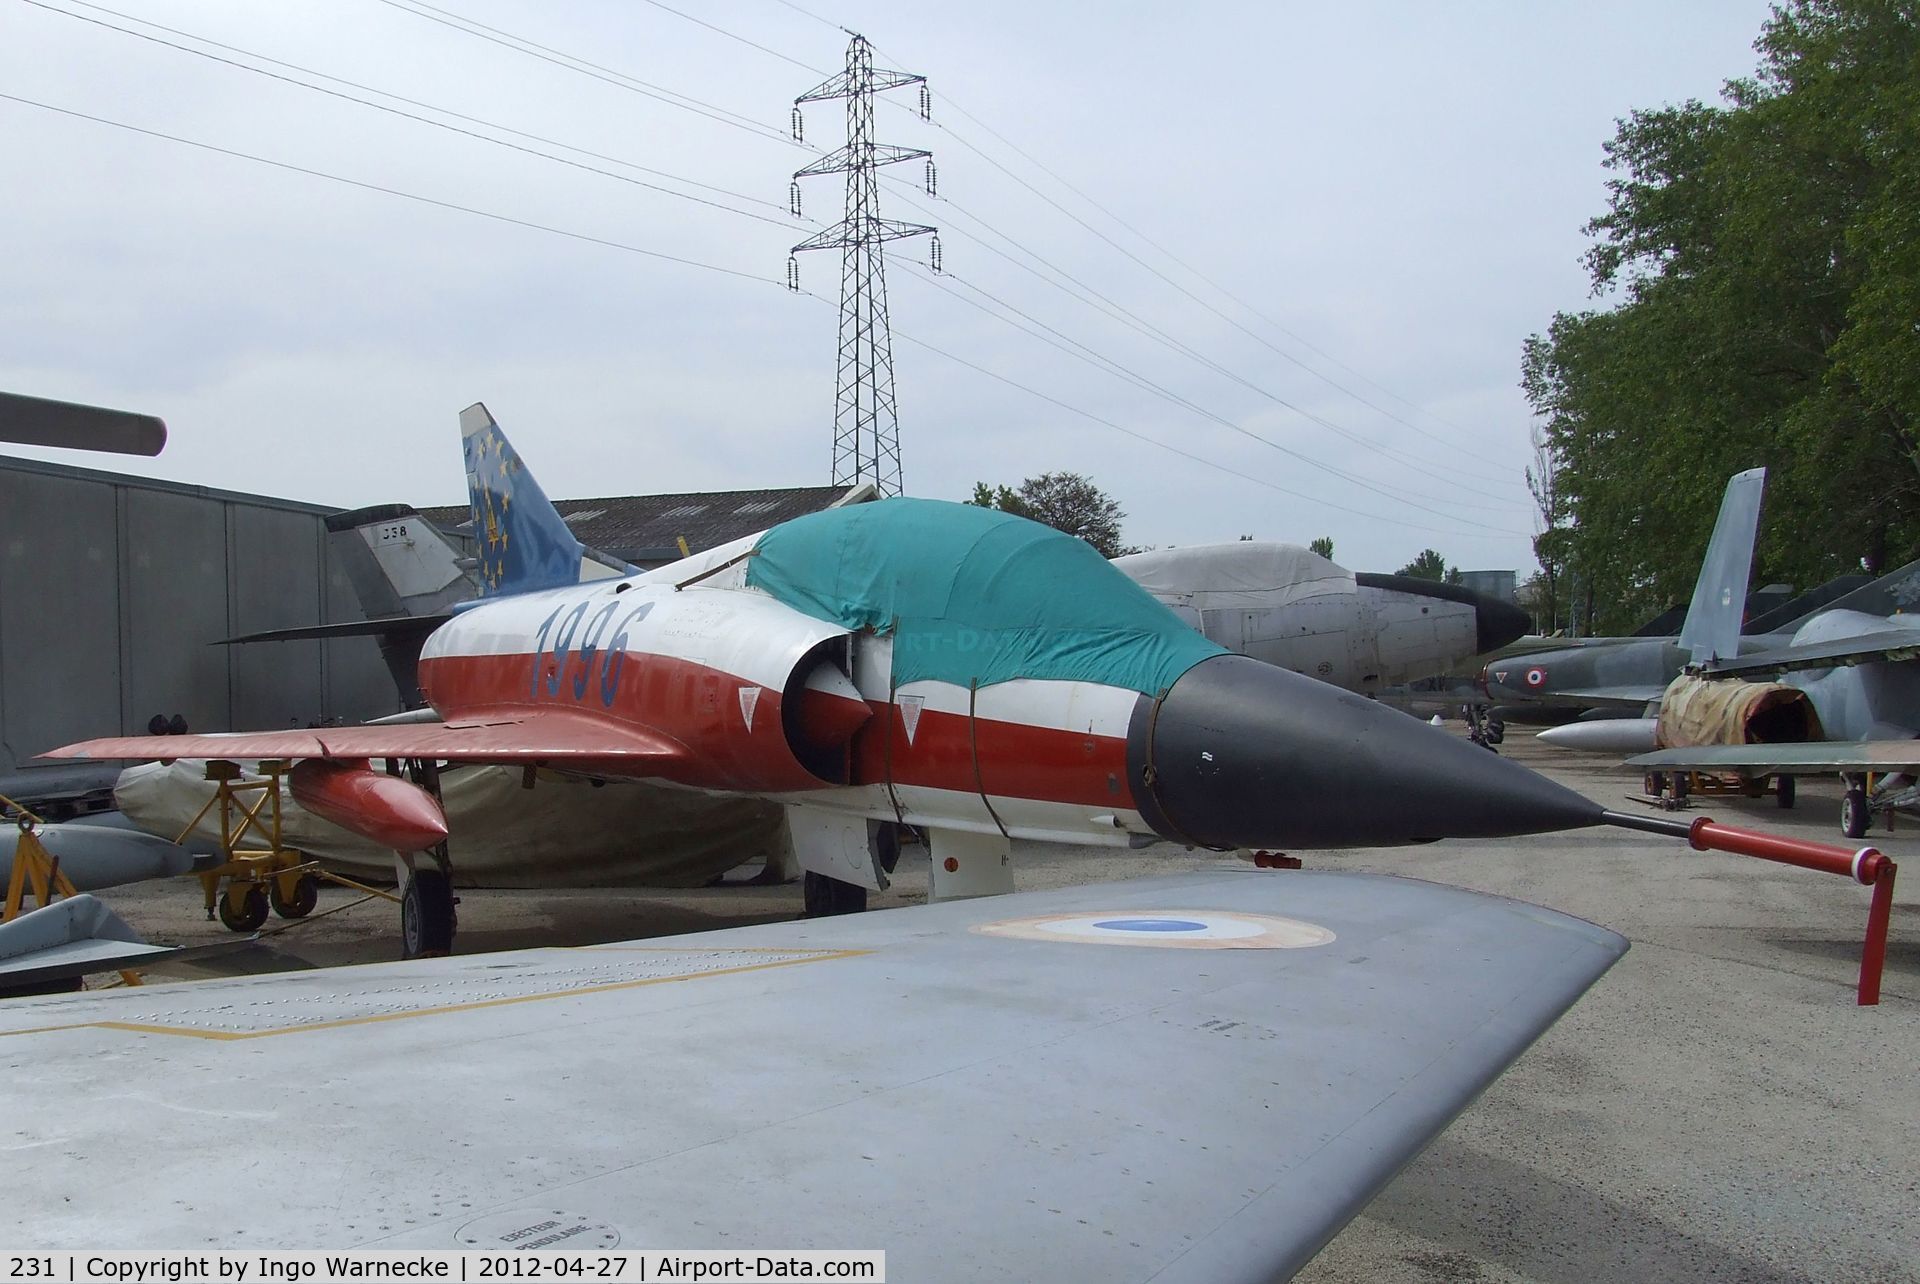 231, Dassault Mirage IIIB C/N 231, Dassault Mirage III B at the Musee Aeronautique, Orange